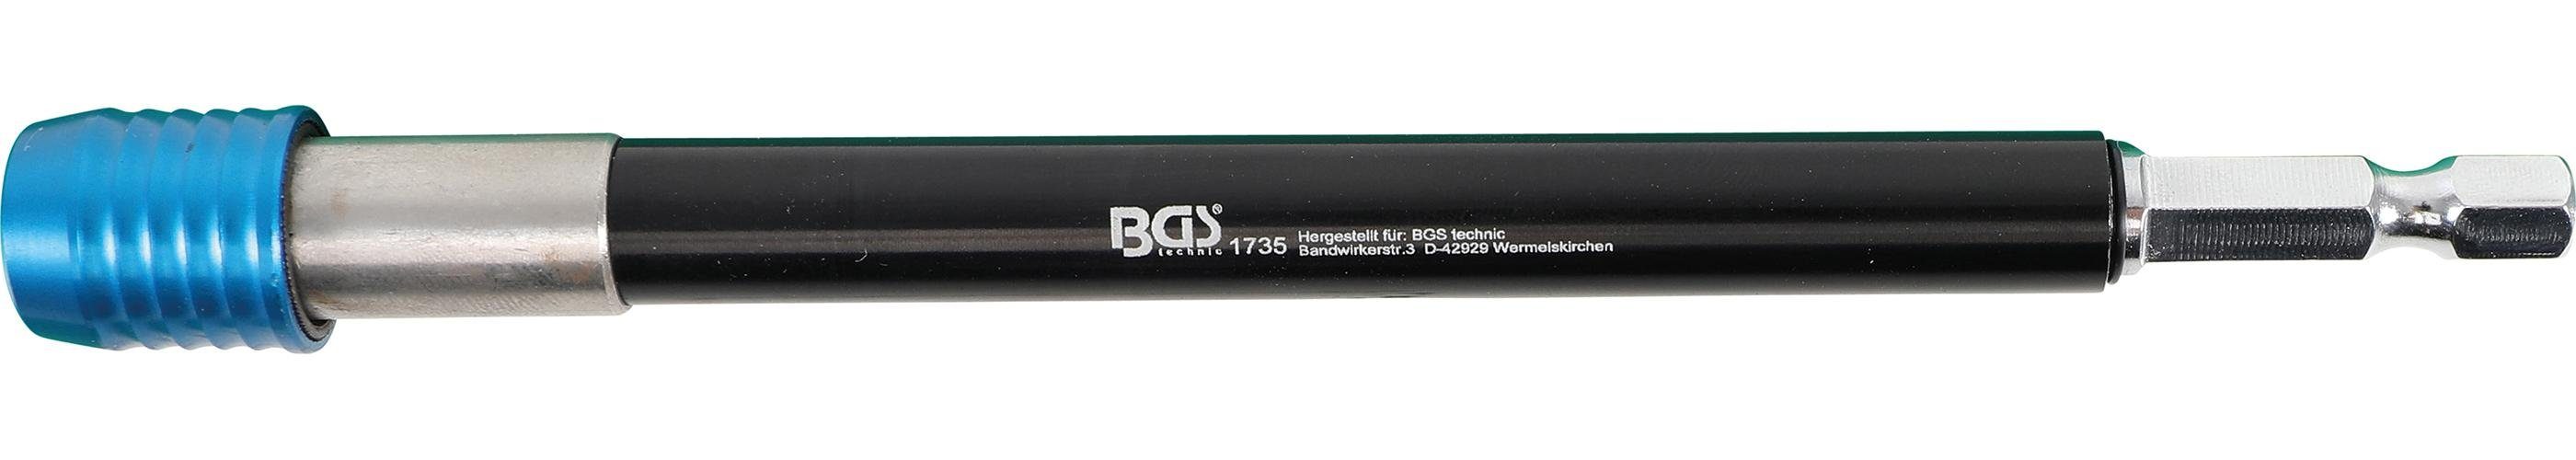 BGS technic Ratschenringschlüssel Automatischer Bithalter, Abtrieb Innensechskant 6,3 mm (1/4), 150 mm